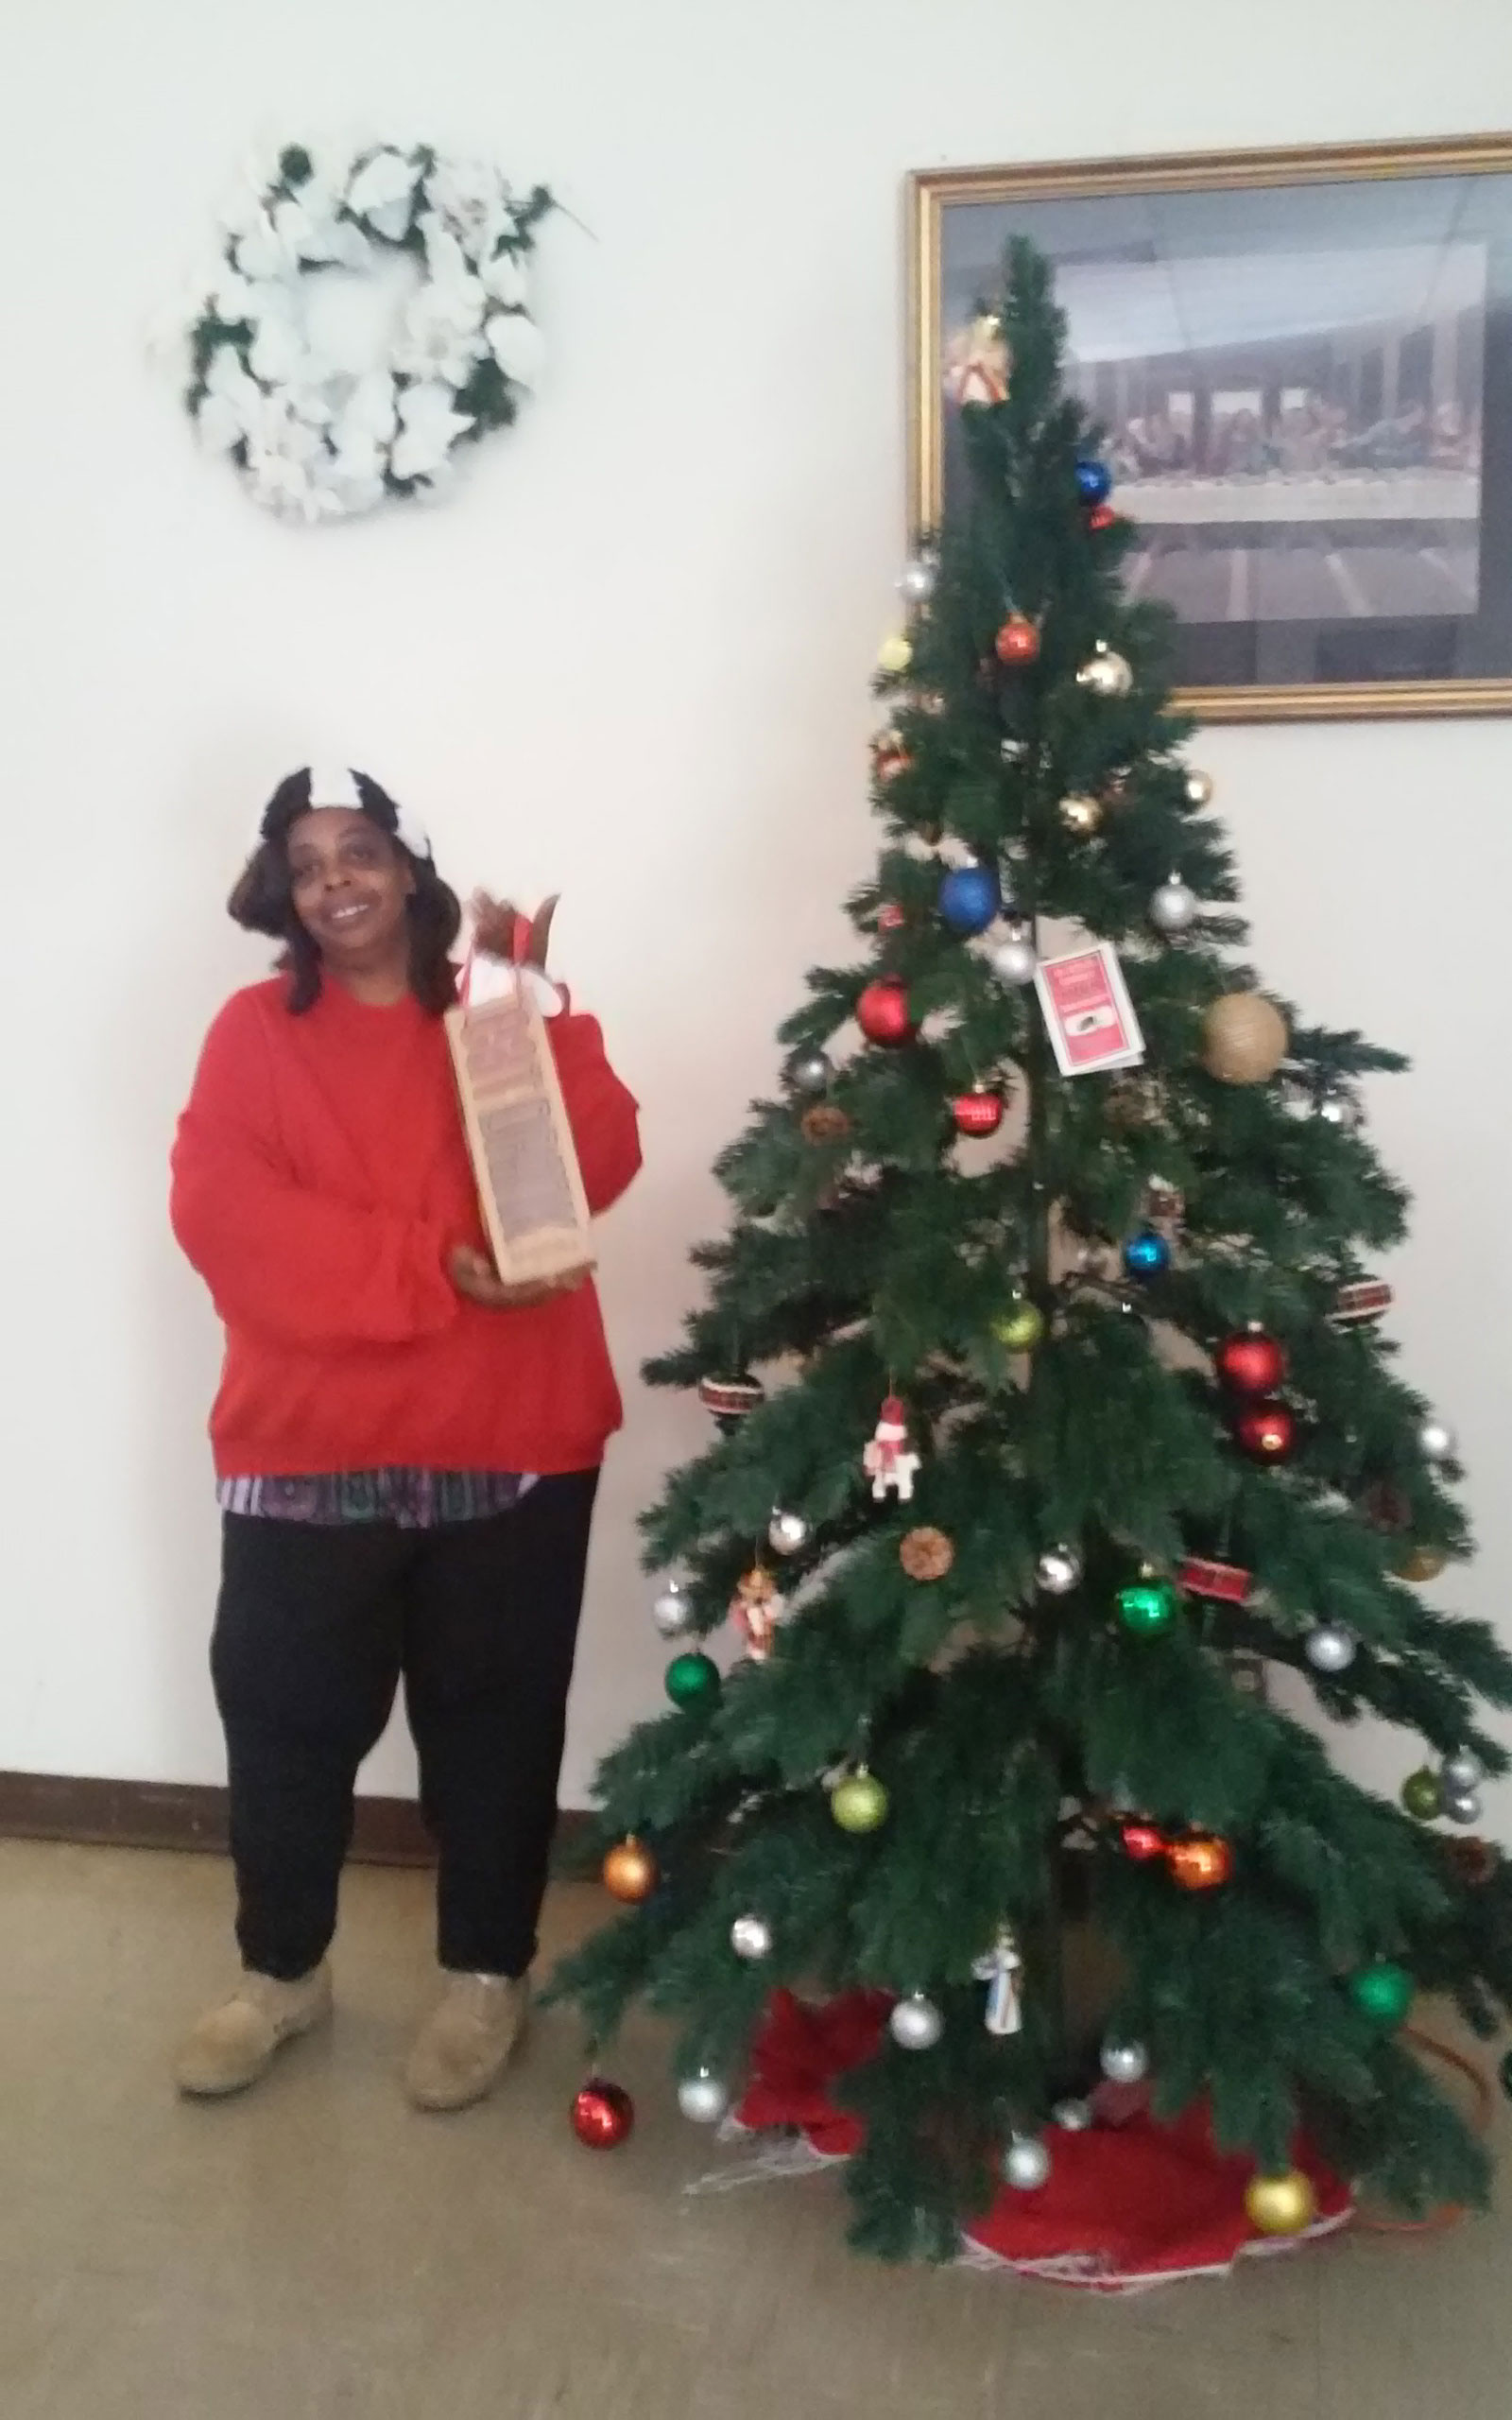 Church Christmas Tree and Gift